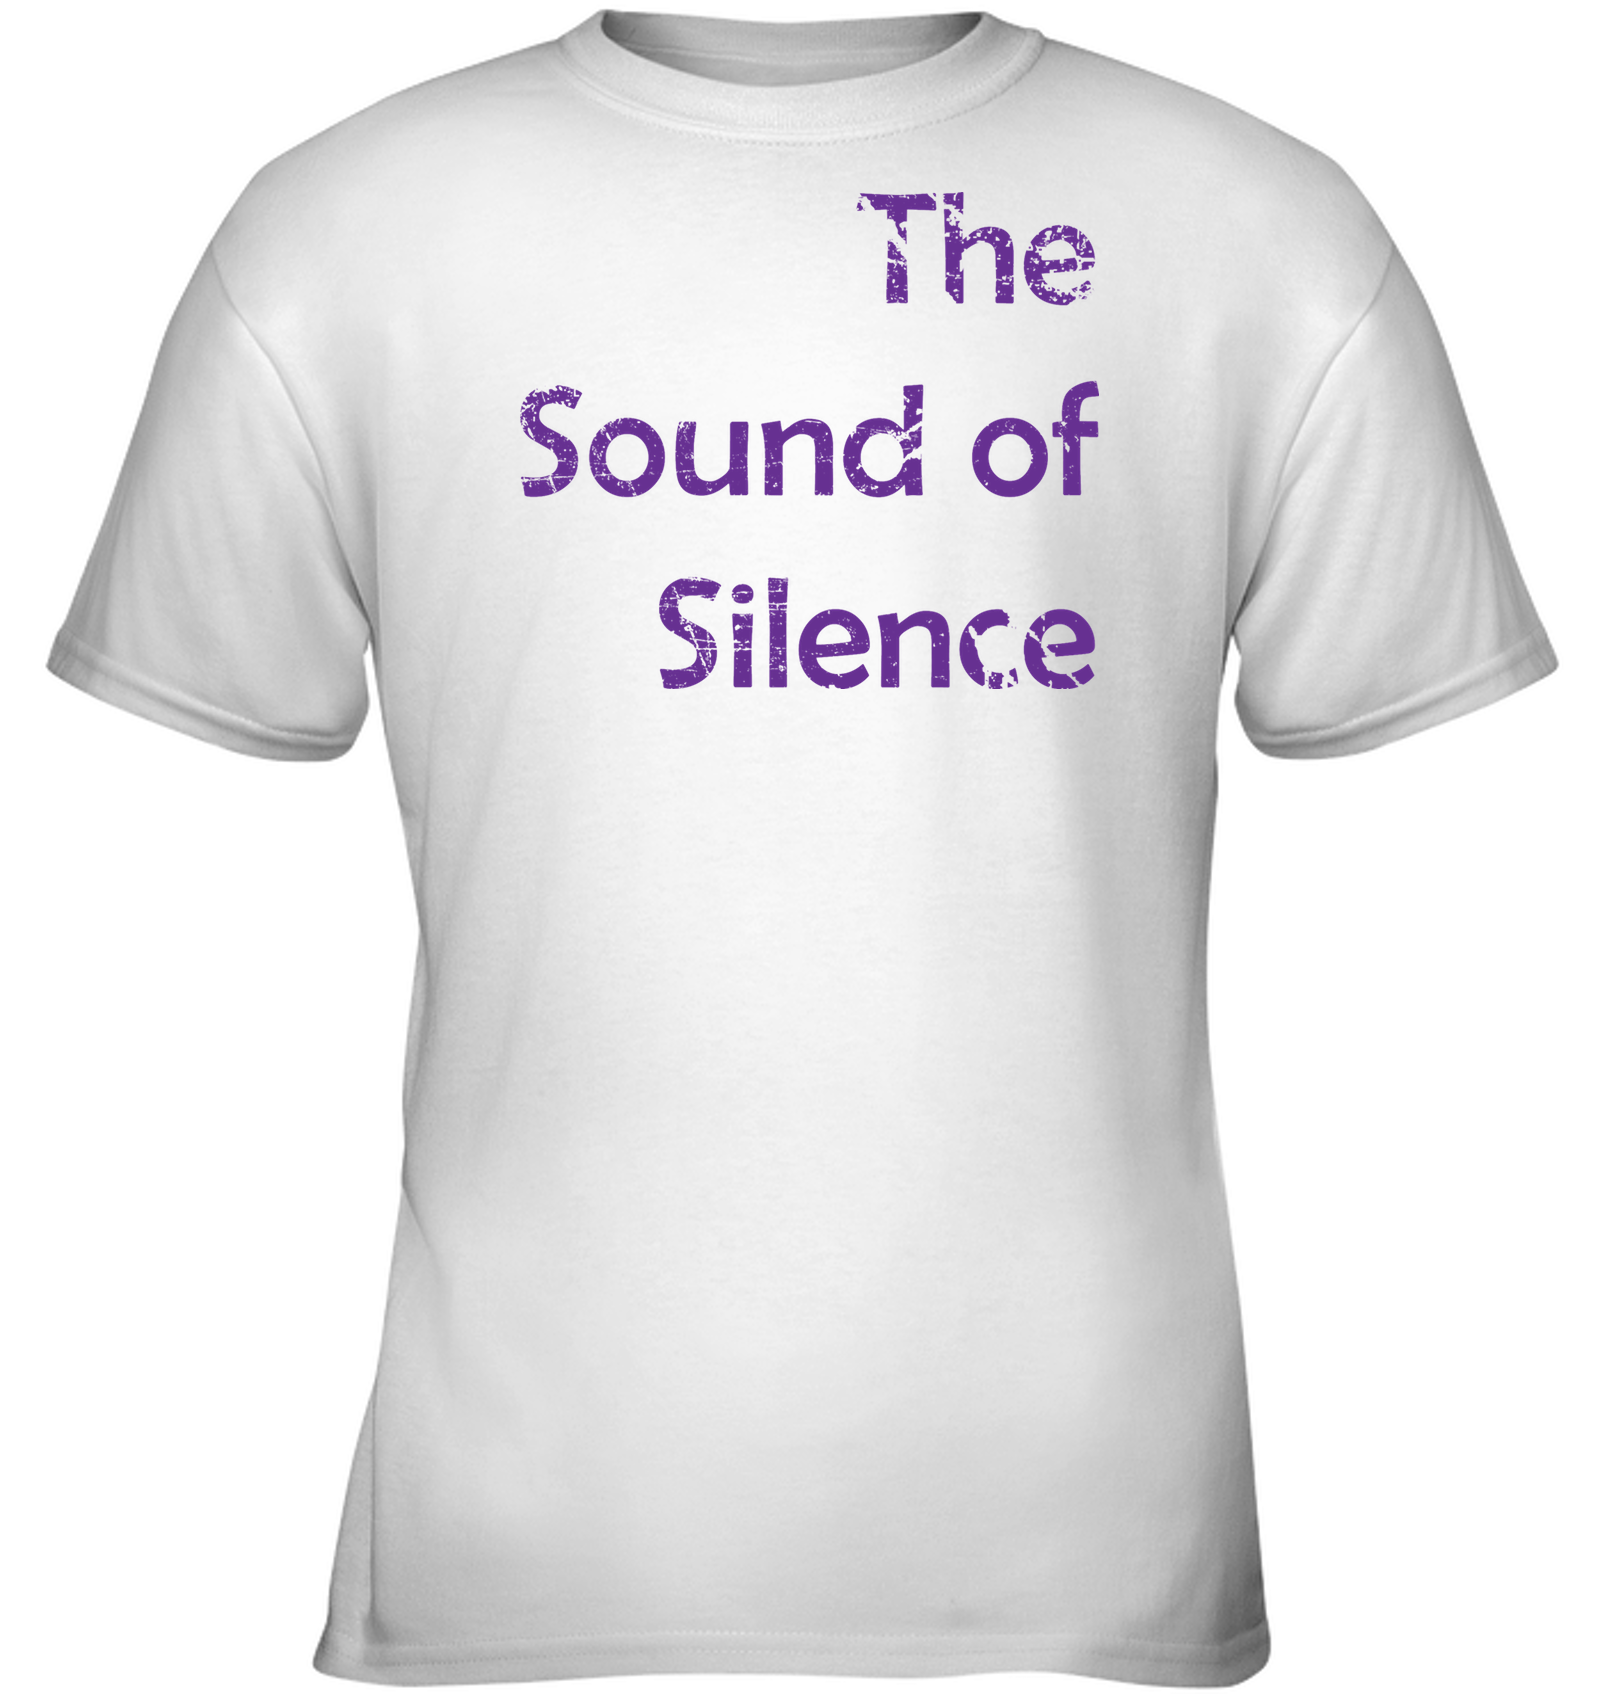 The Sound of Silence - Gildan Youth Short Sleeve T-Shirt